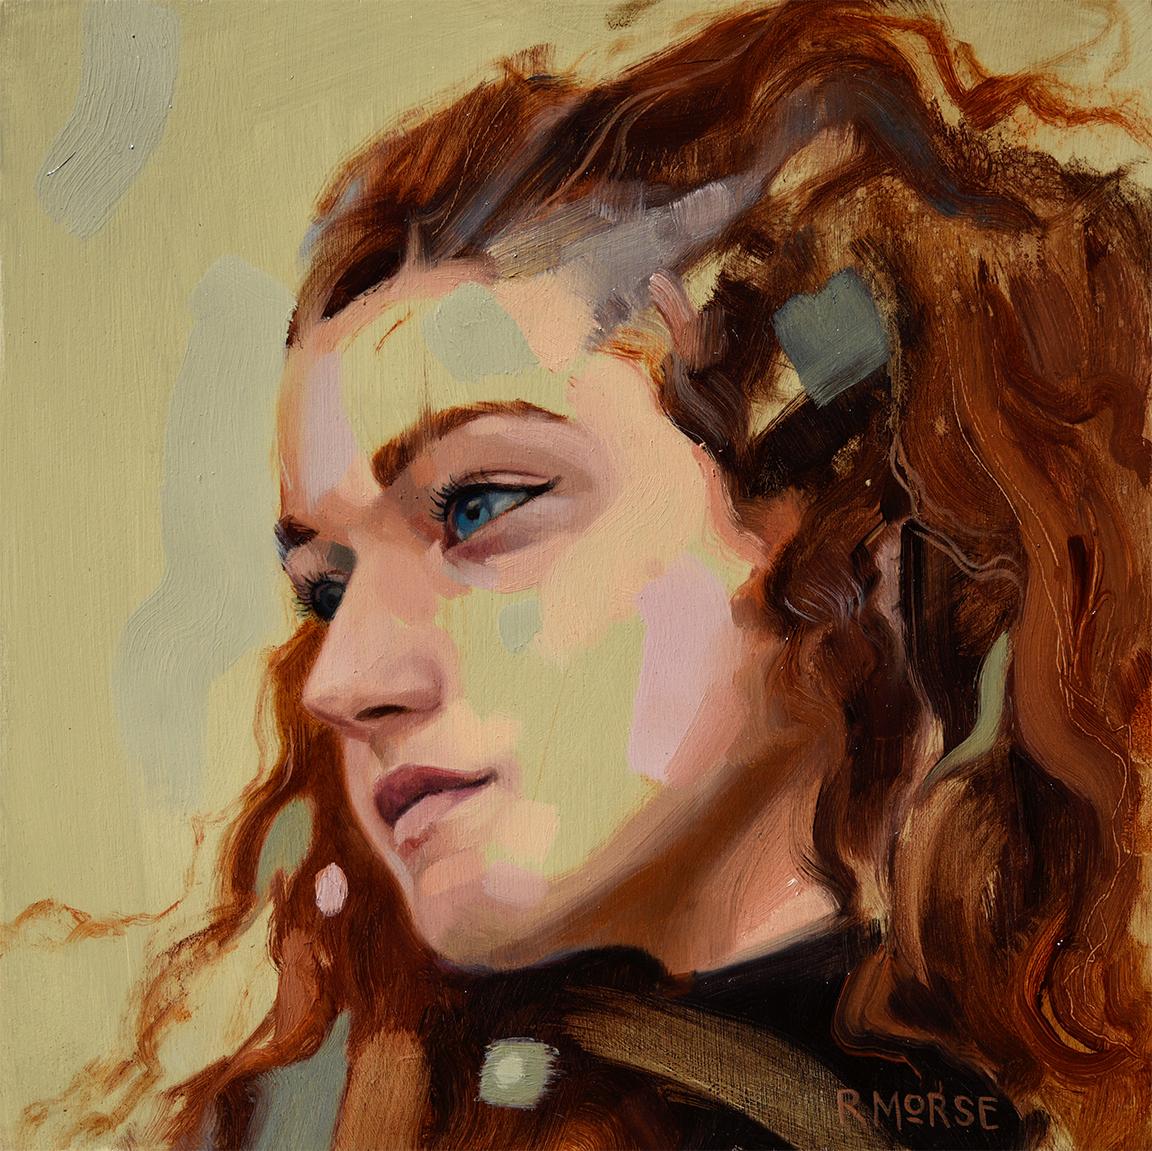 Ryan Morse Portrait Painting - Garnet 